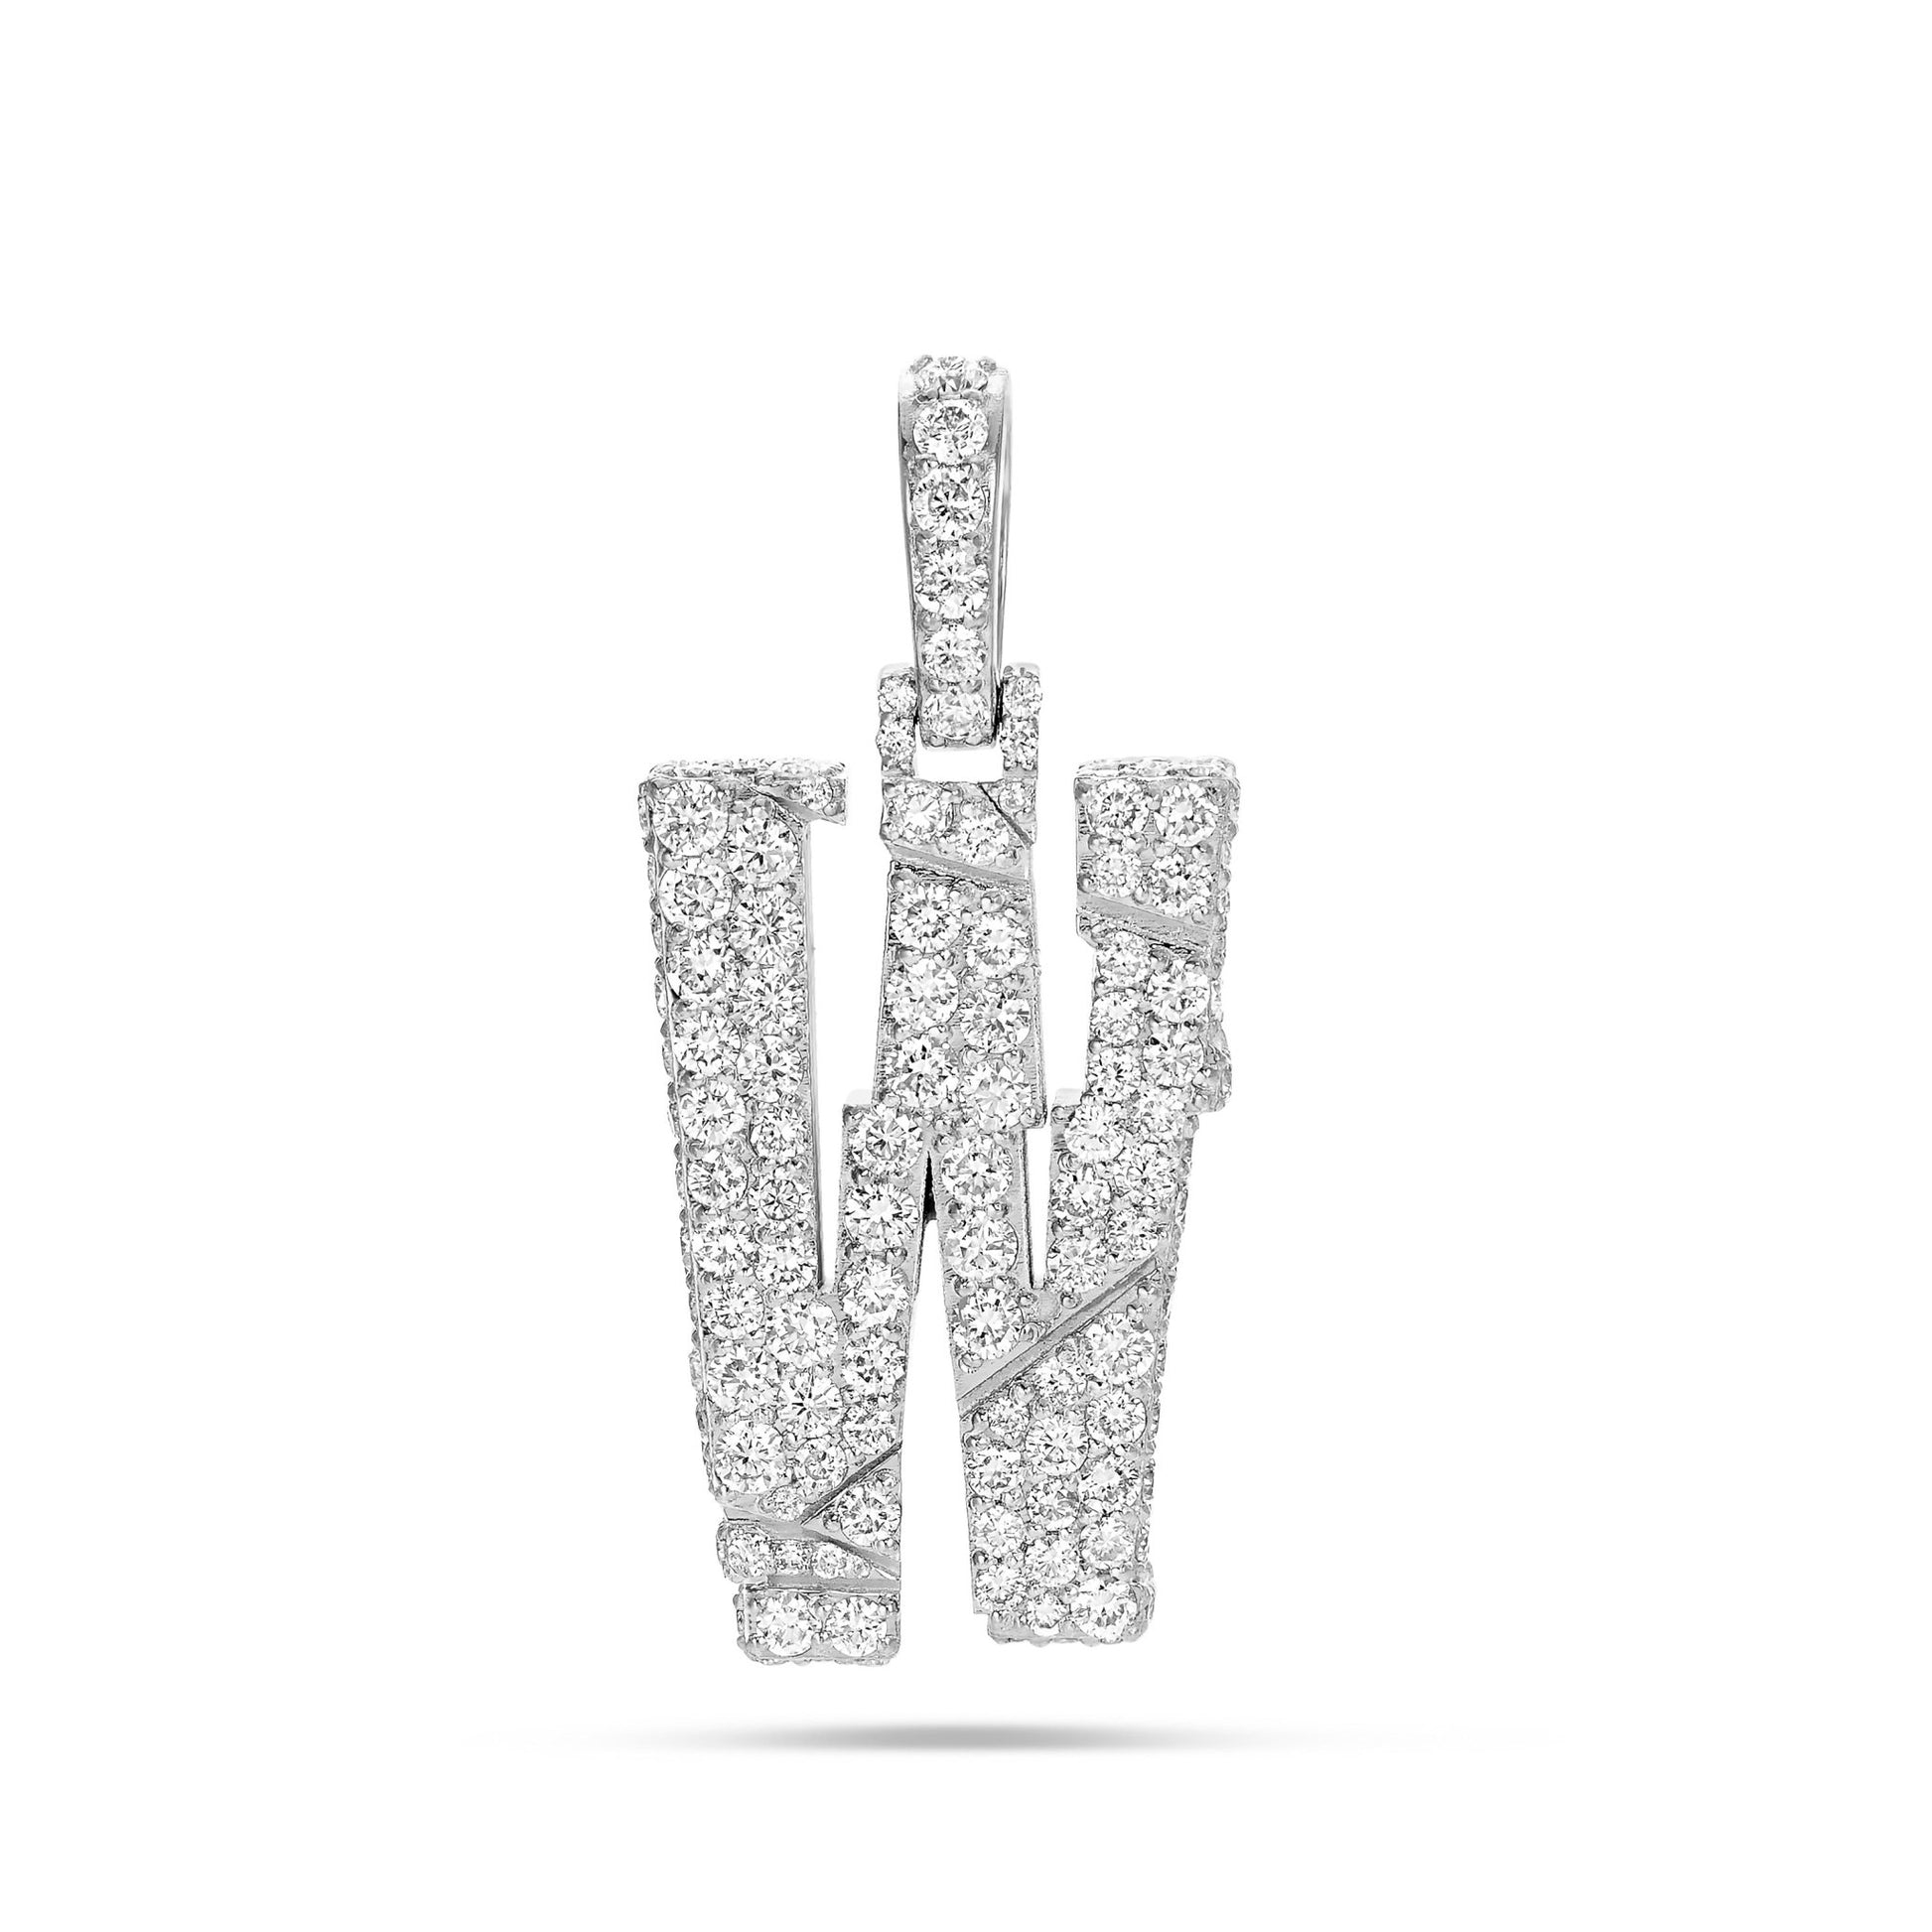 Small "W" Diamond Wallo Pendant - Shyne Jewelers WALLOCUSTOMSMALL Shyne Jewelers